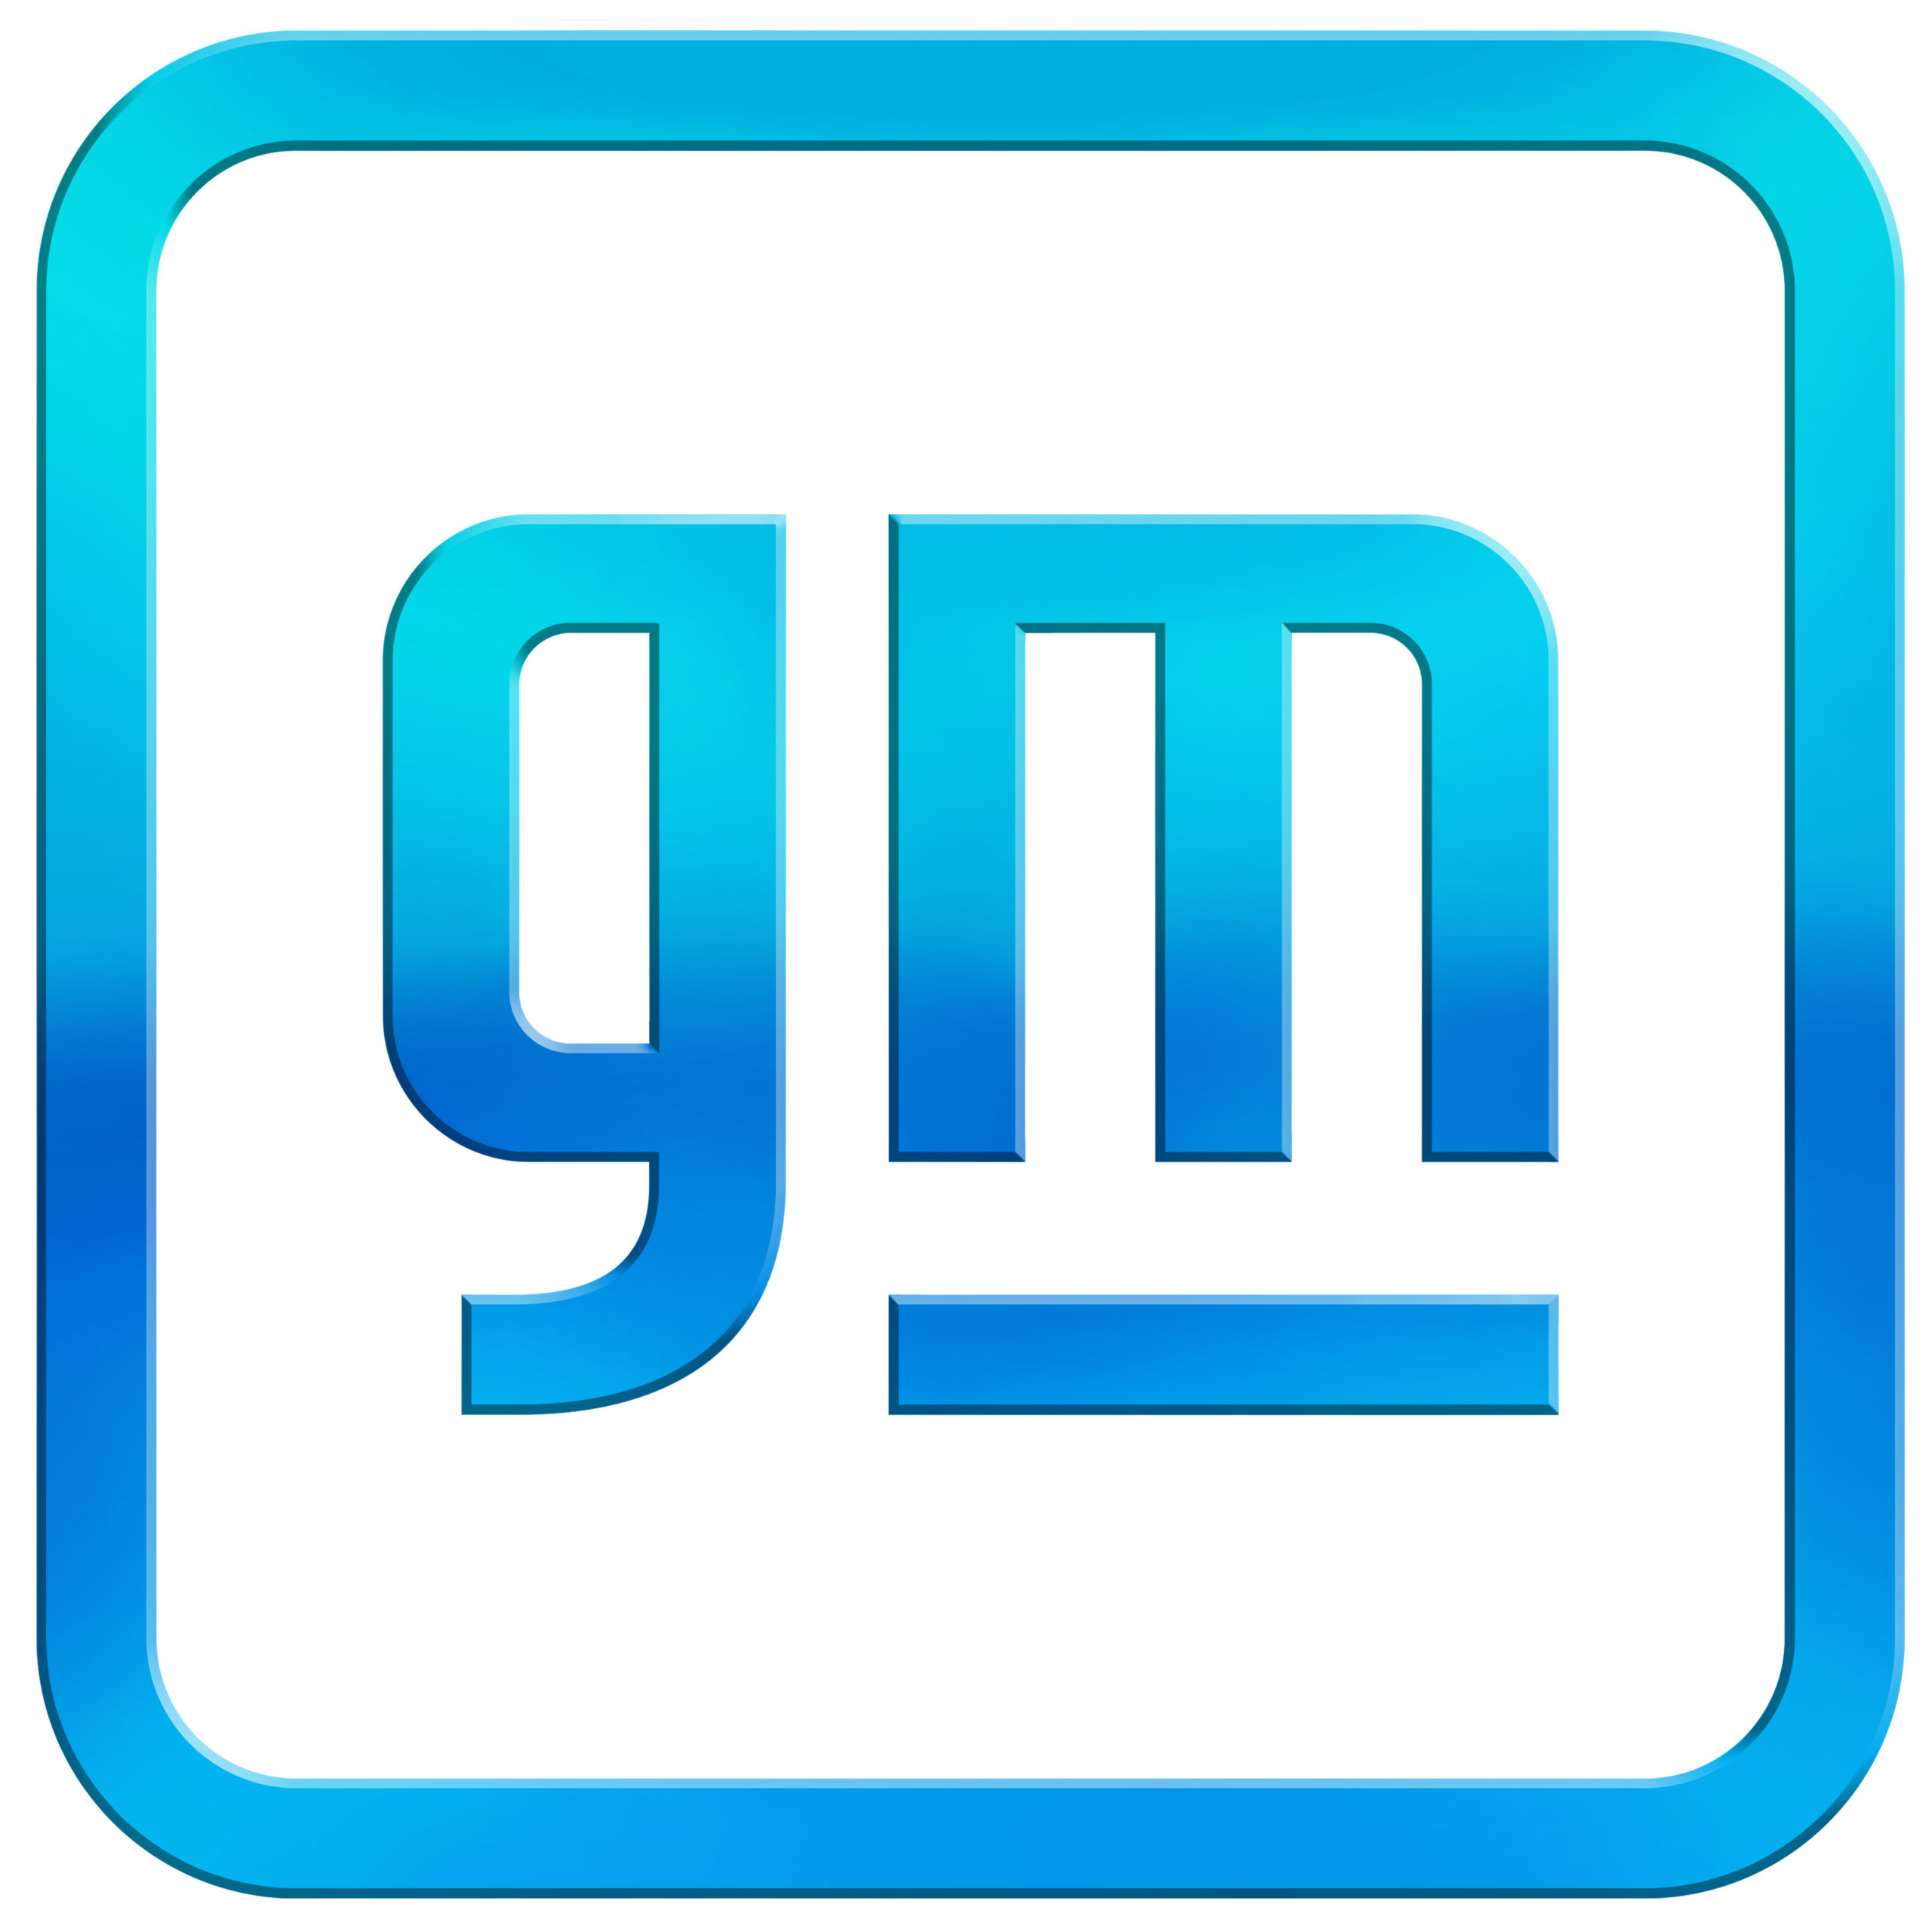 GM’s new logo to emphasize new electric identity